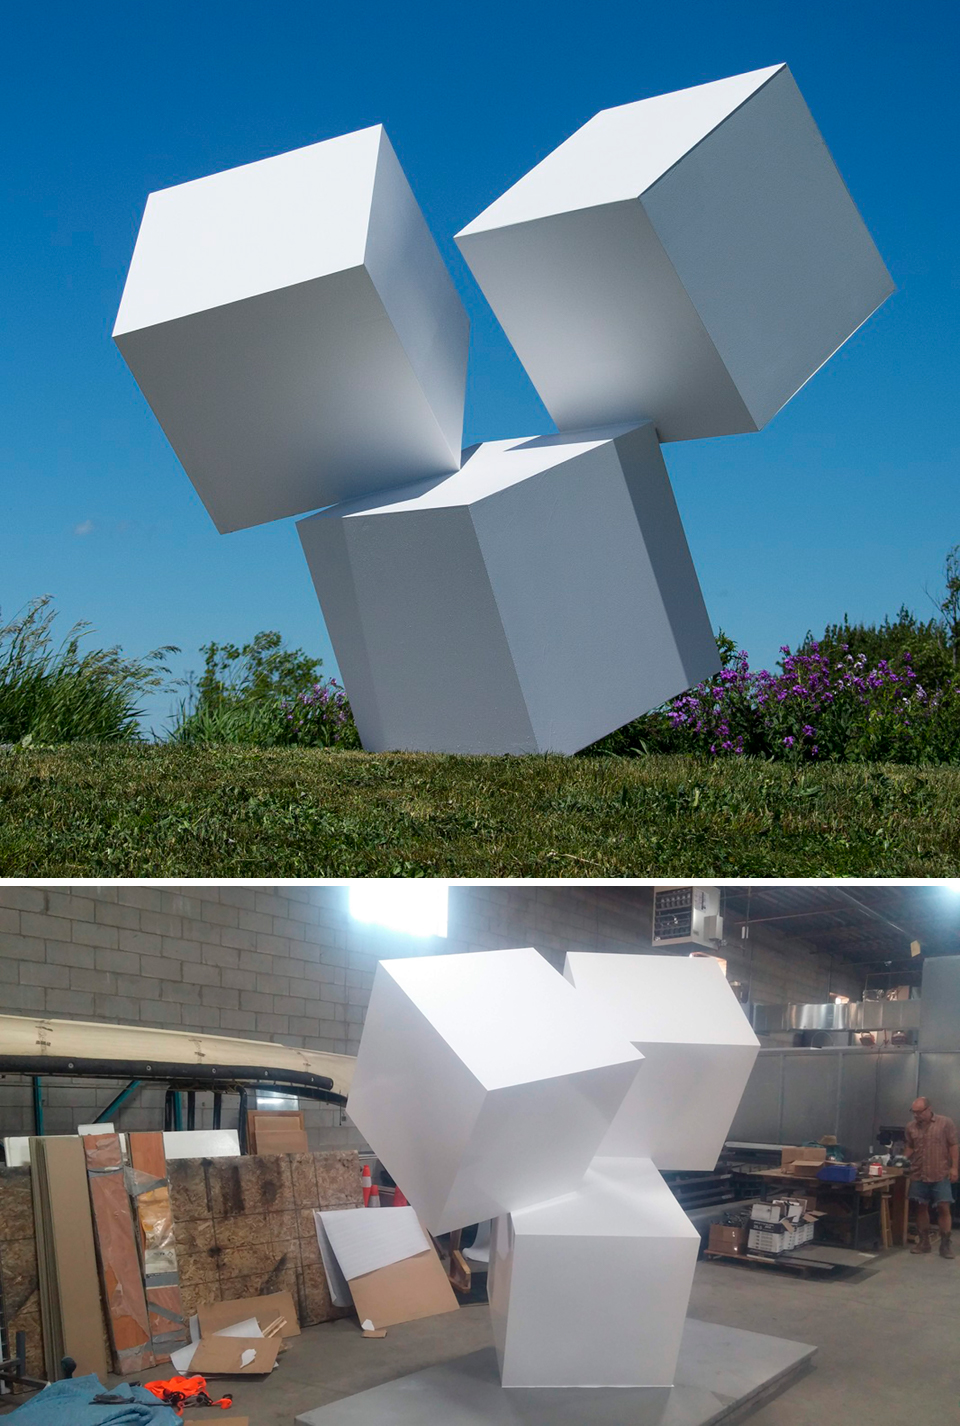 Chute des cubes, Mark Plamondon, Oeno Gallery